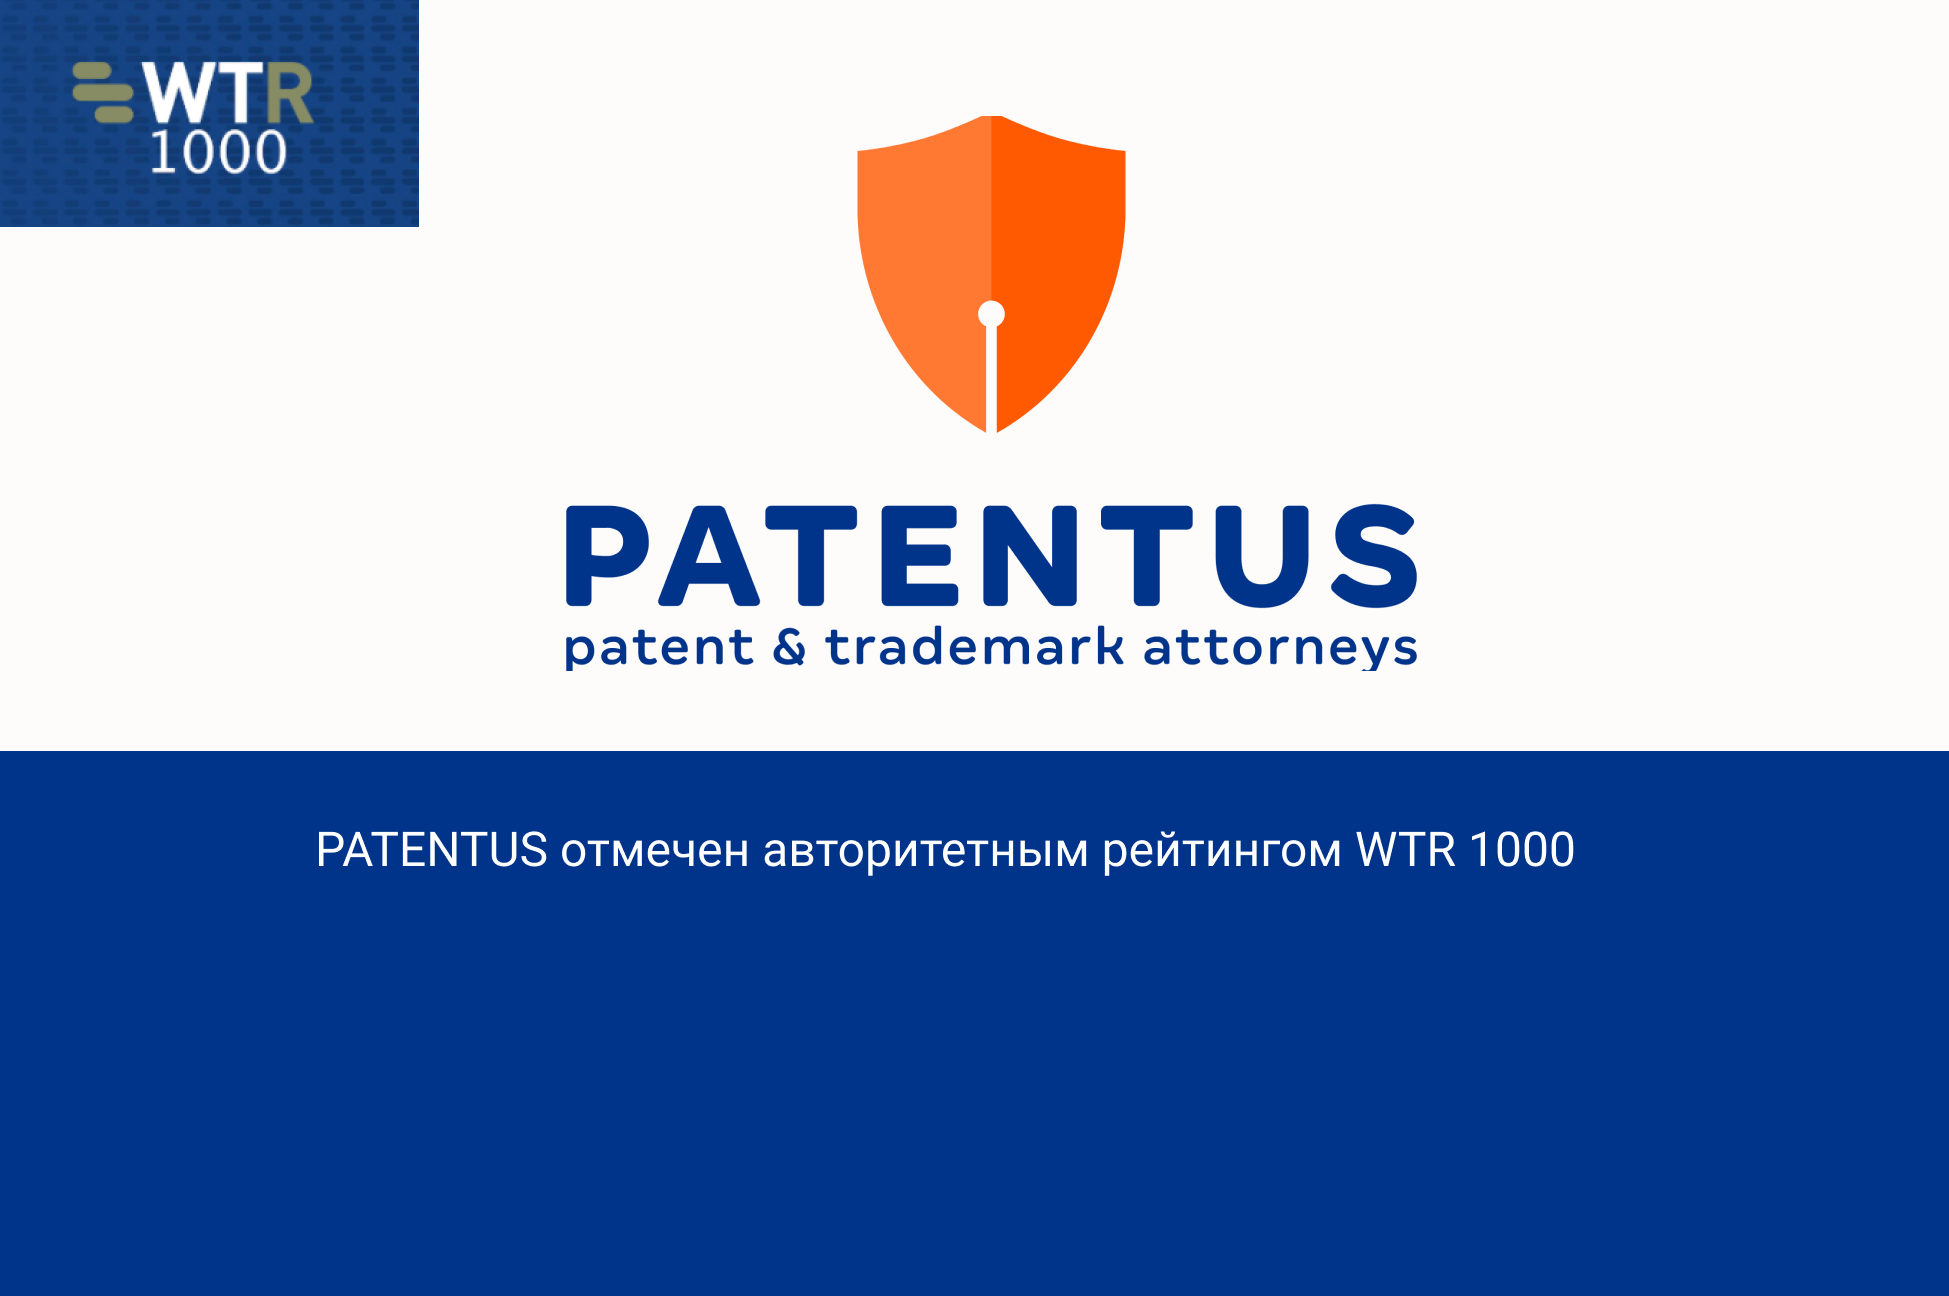 PATENTUS отмечен авторитетным рейтингом World Trademark Review 1000